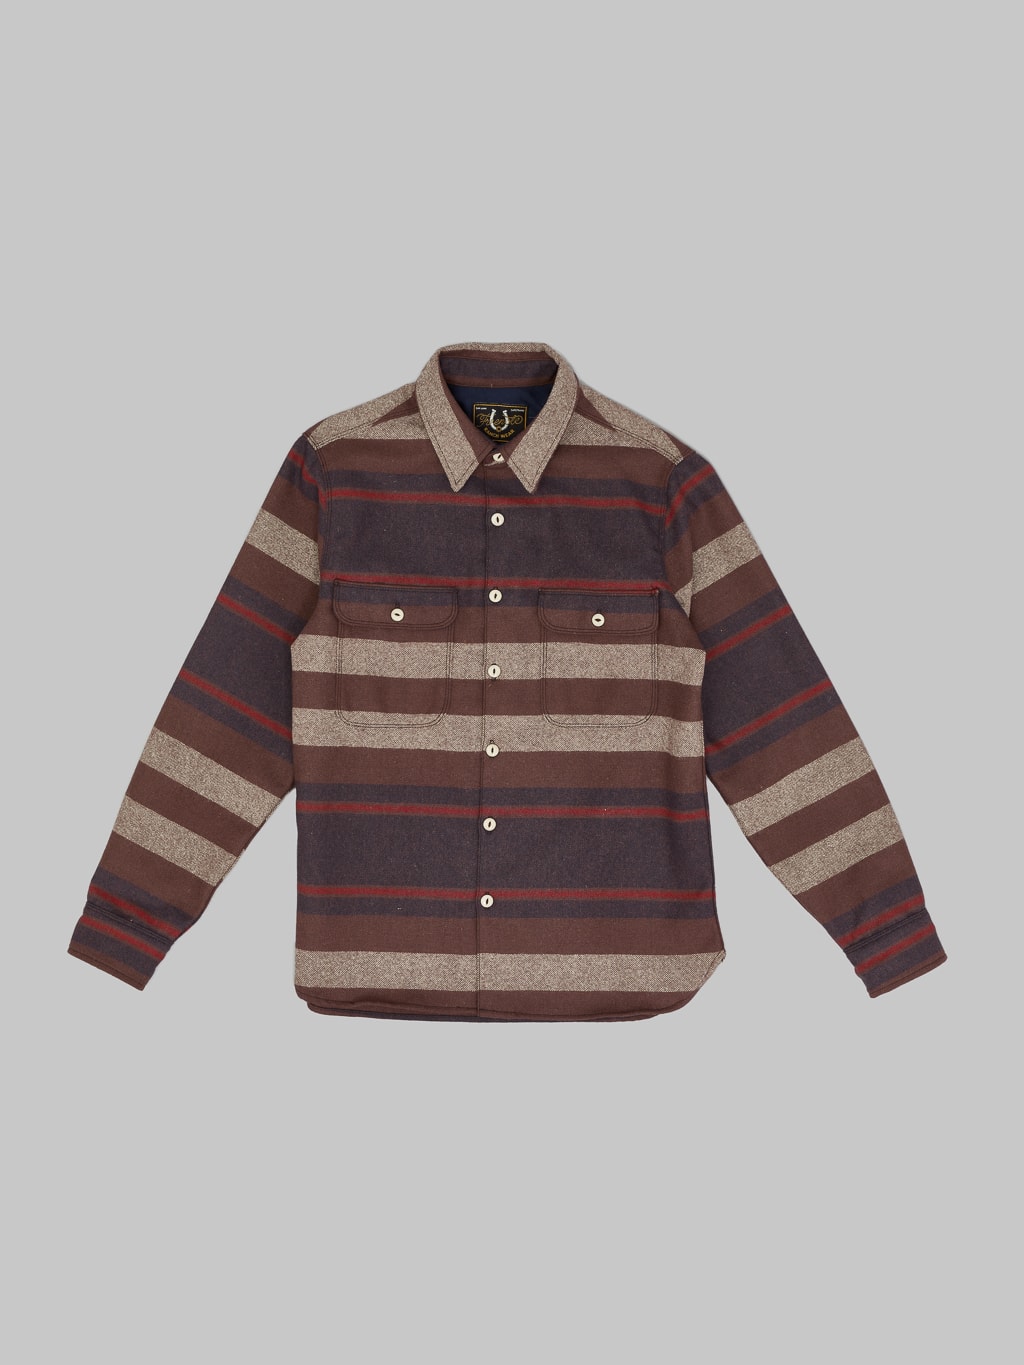 freenote cloth benson brown stripe classic wool overshirt made in USA